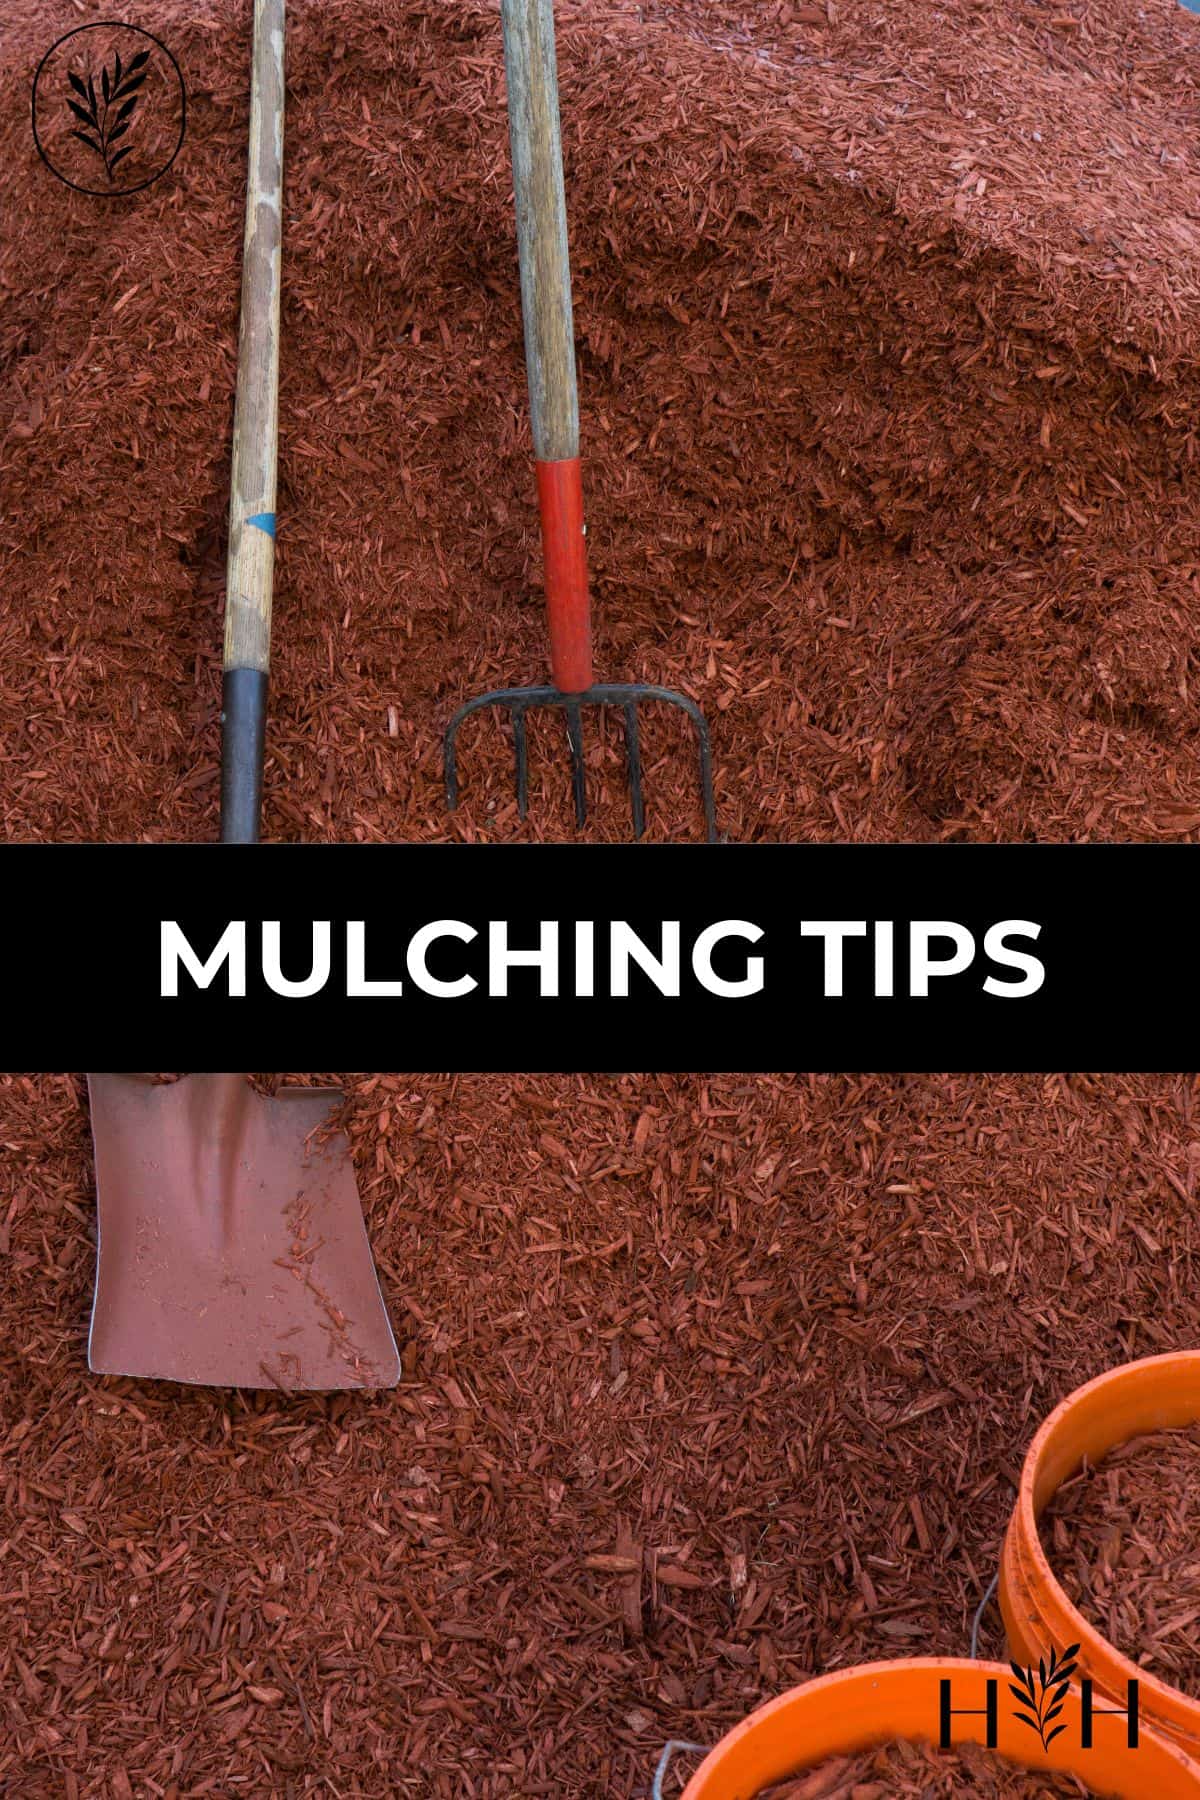 Mulching tips via @home4theharvest